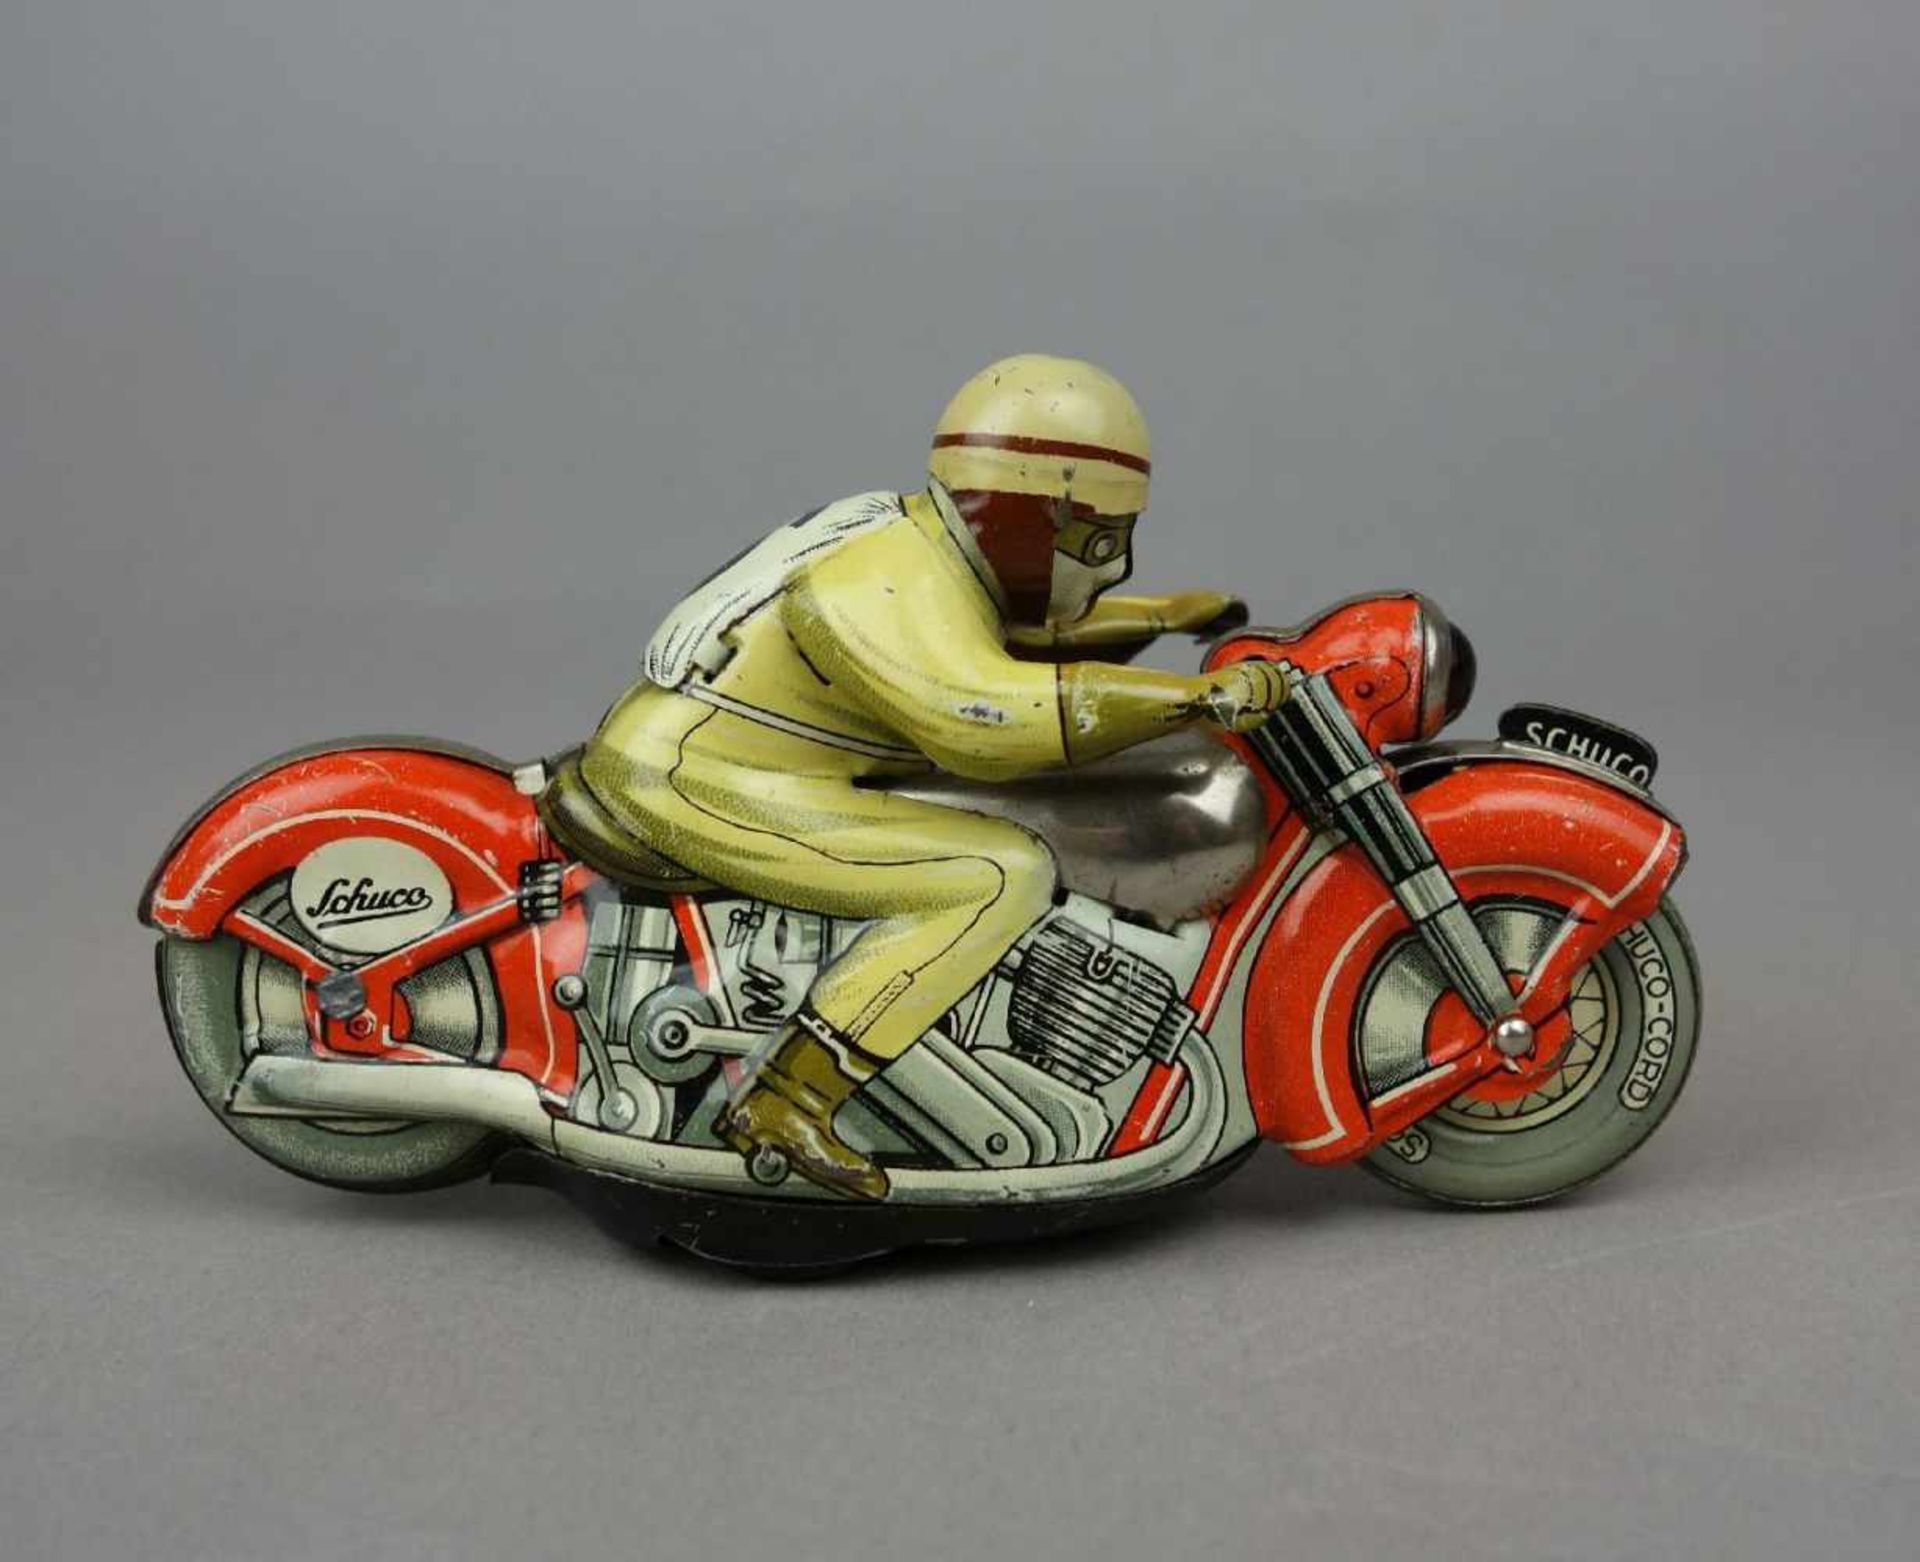 BLECHSPIELZEUG: MOTORRAD "MIRAKOMOT" / tin toy bike, um 1955, Manufaktur Schuco / Nürnberg, Blech, - Image 3 of 5